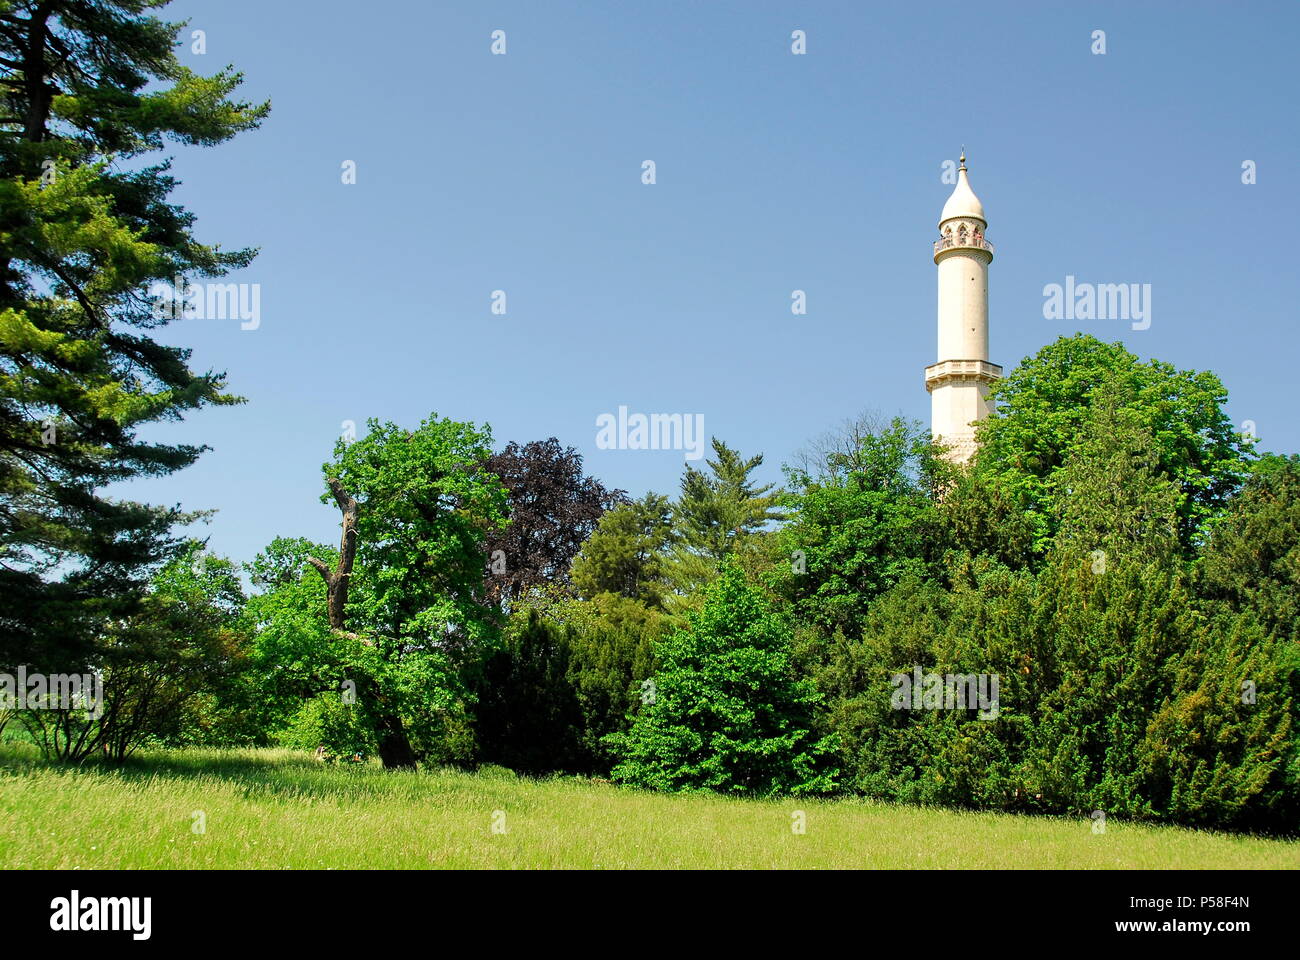 The minaret in the Lednice-Valtice Cultural Landscape Complex in South Moravia, Czech Republic Stock Photo